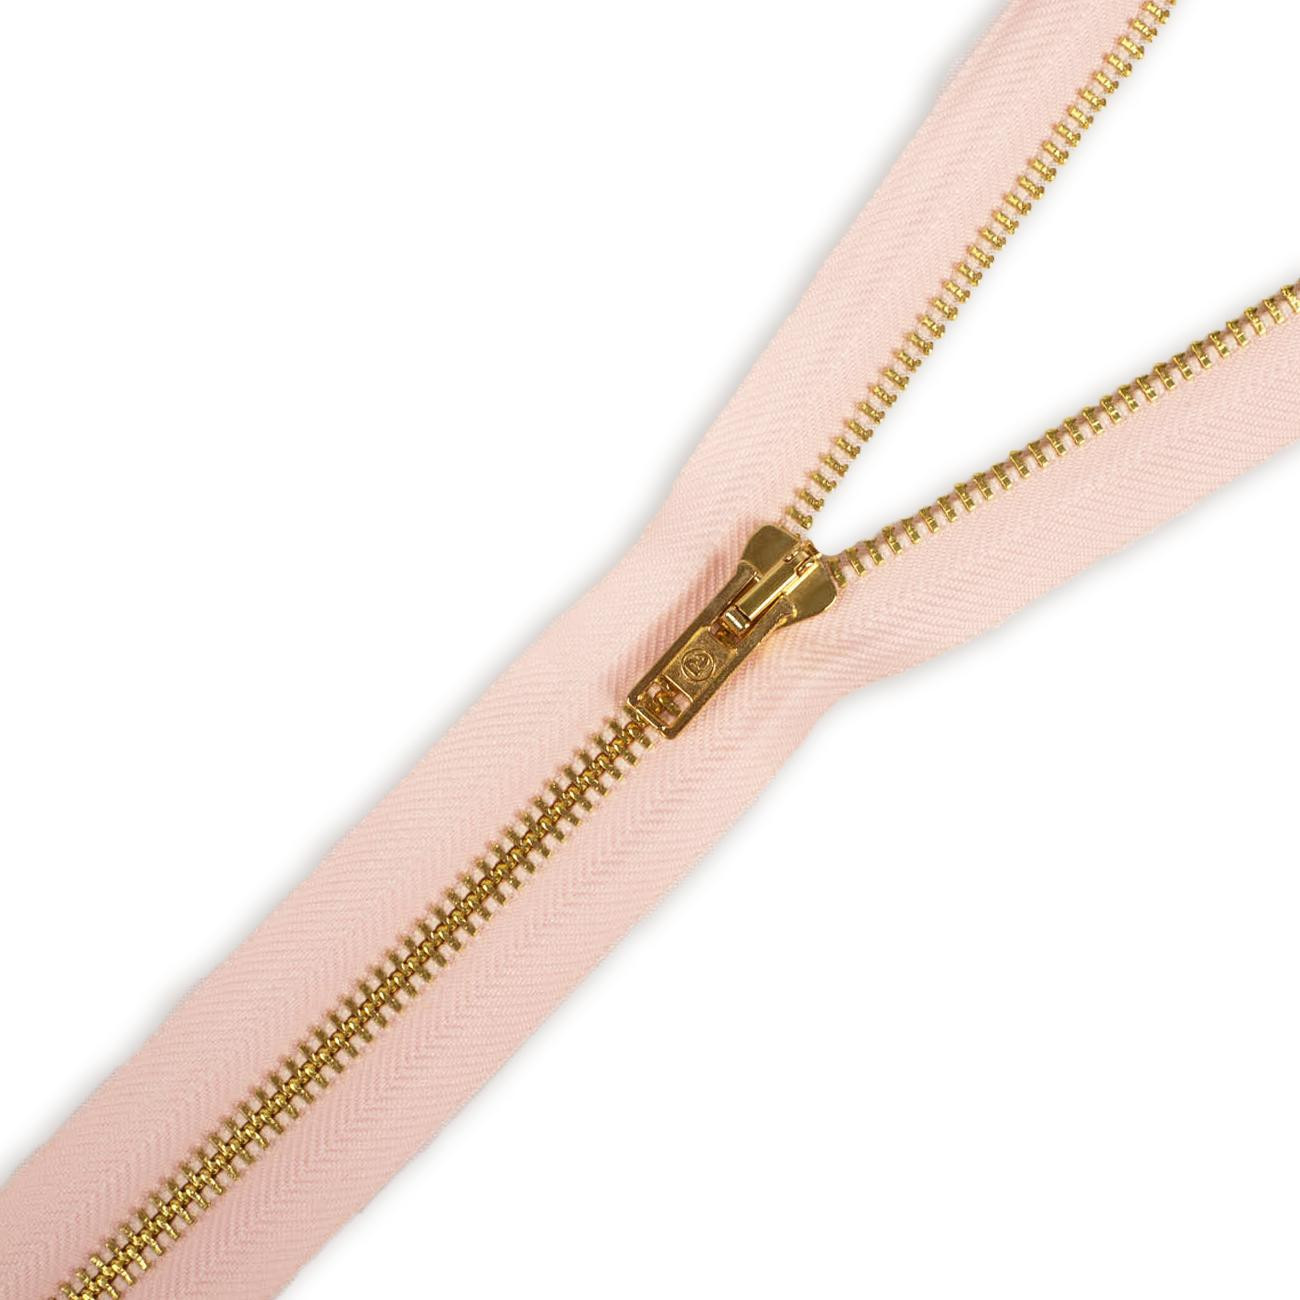 Metal zipper closed-end 14cm – pale pink / gold 